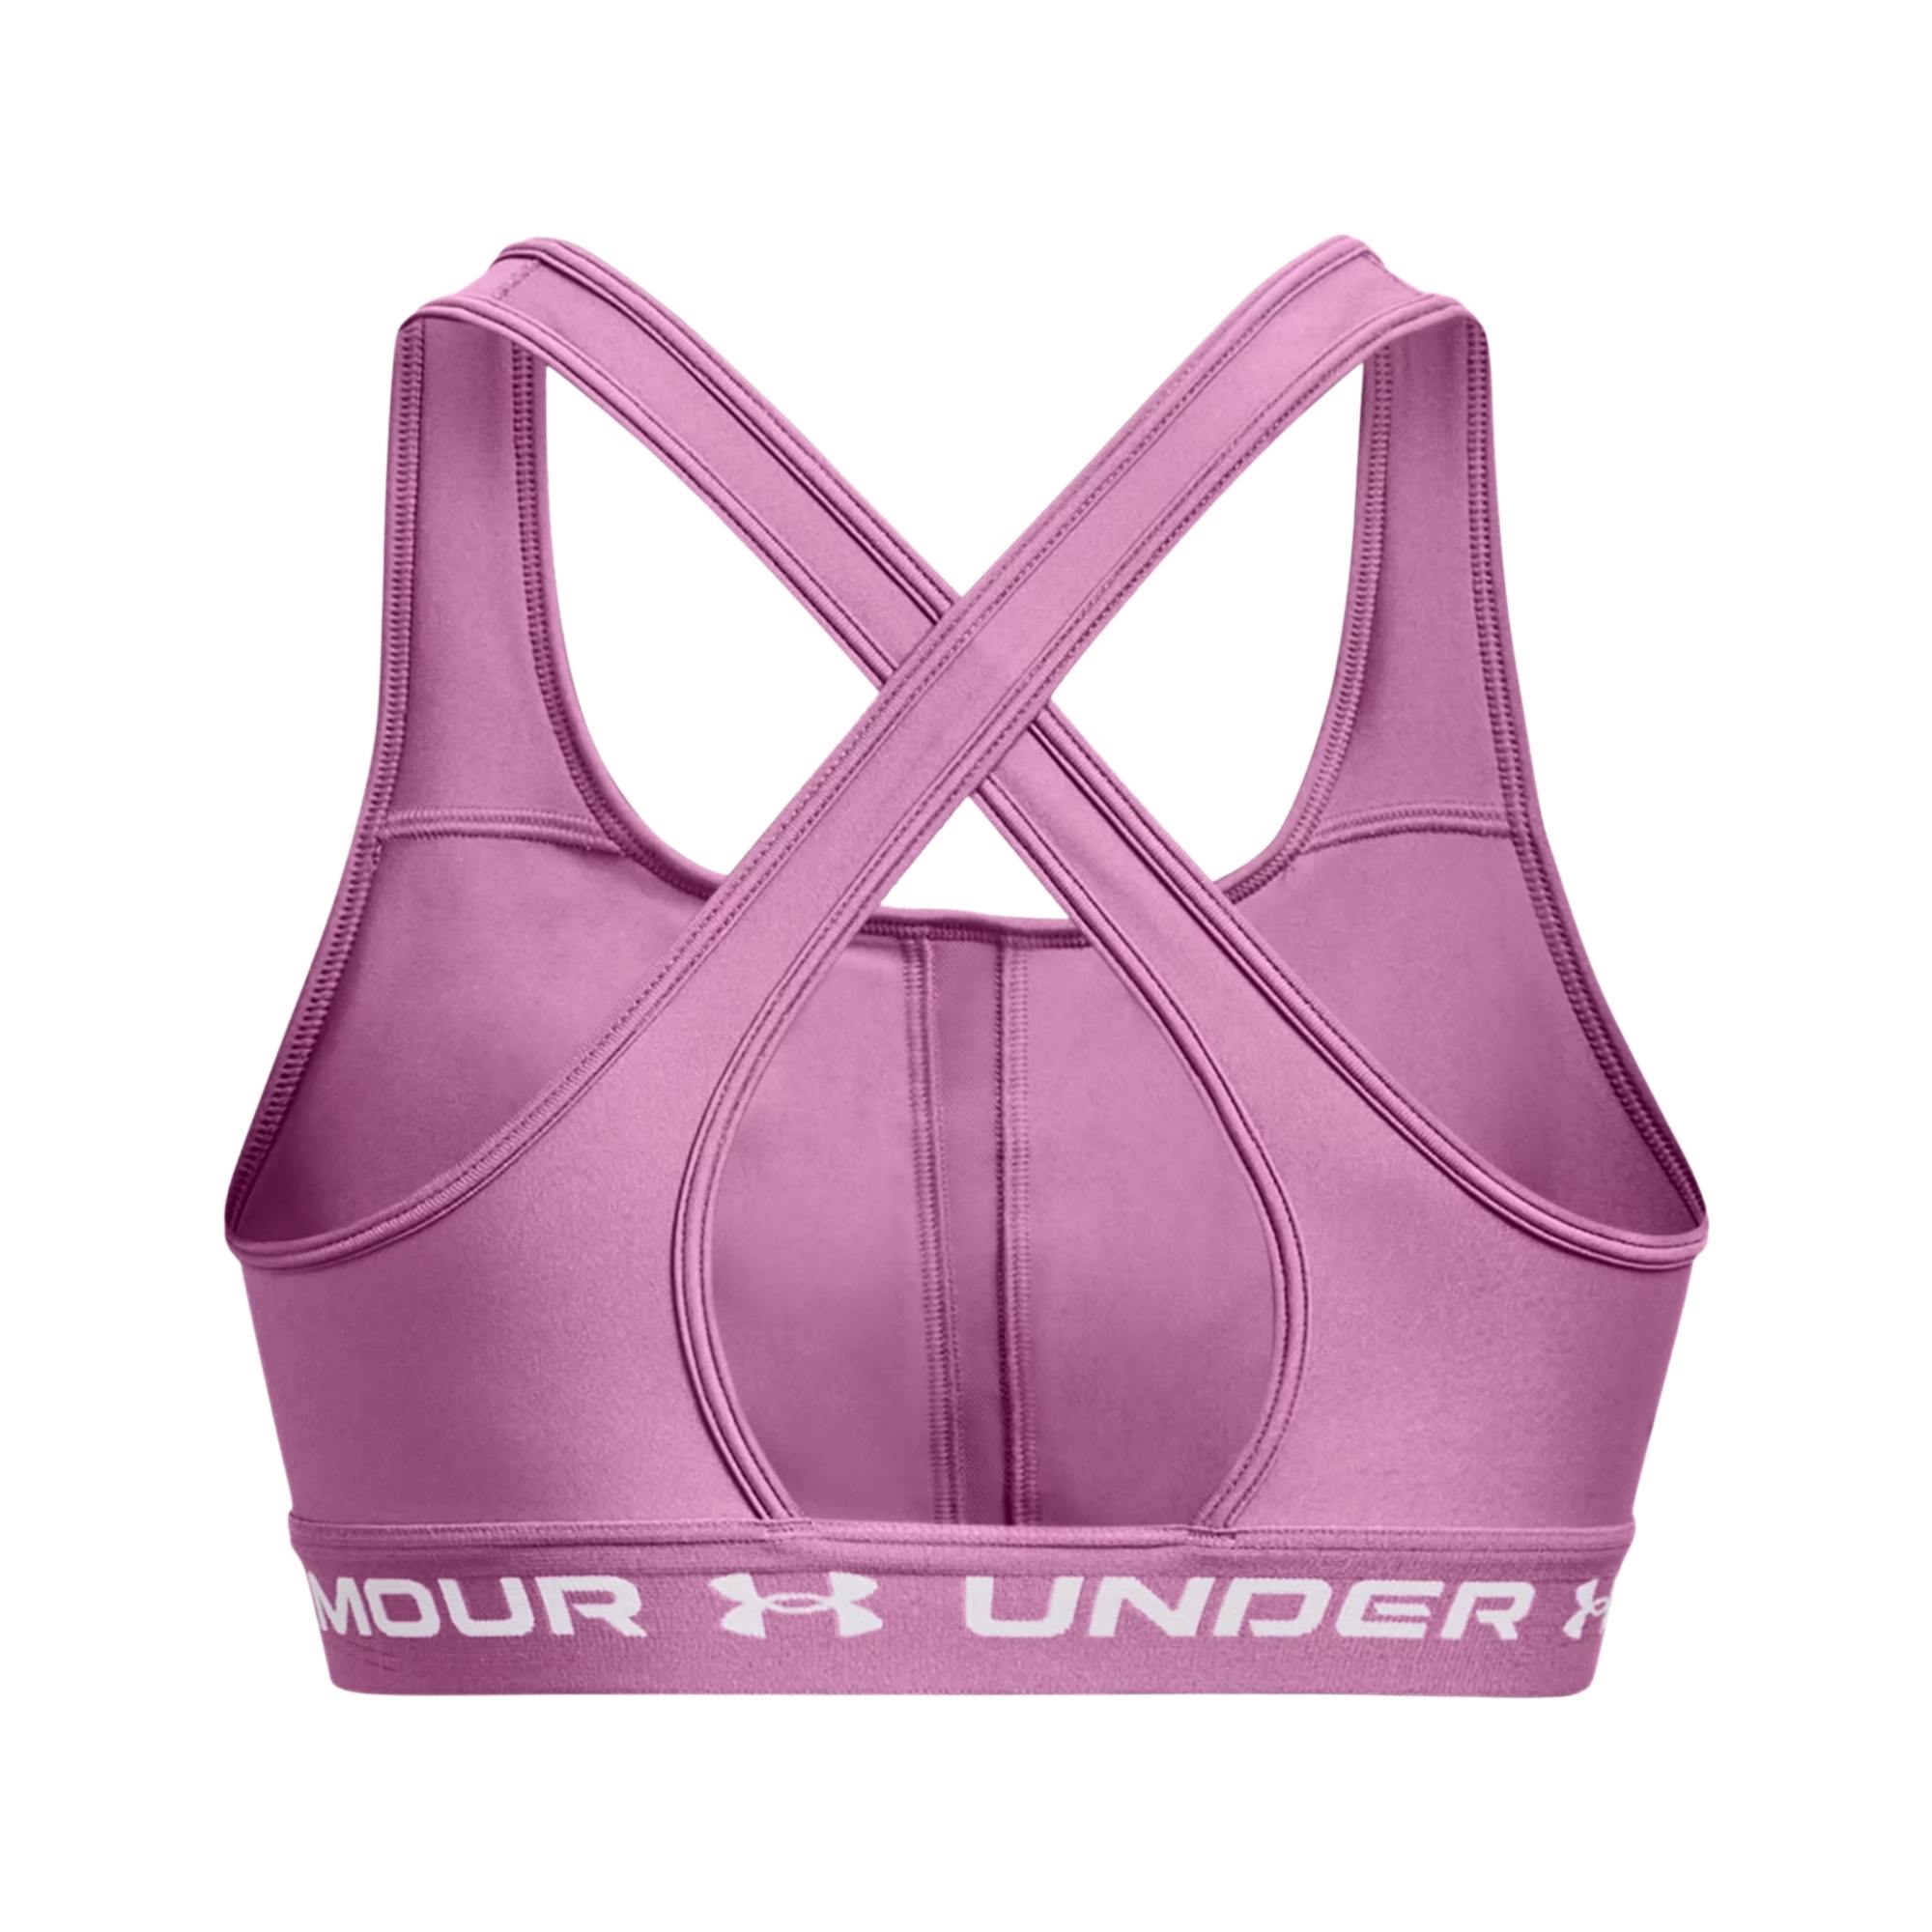 Under Armour, Crossback Womens Sports Bra, Elec Pink/Wht